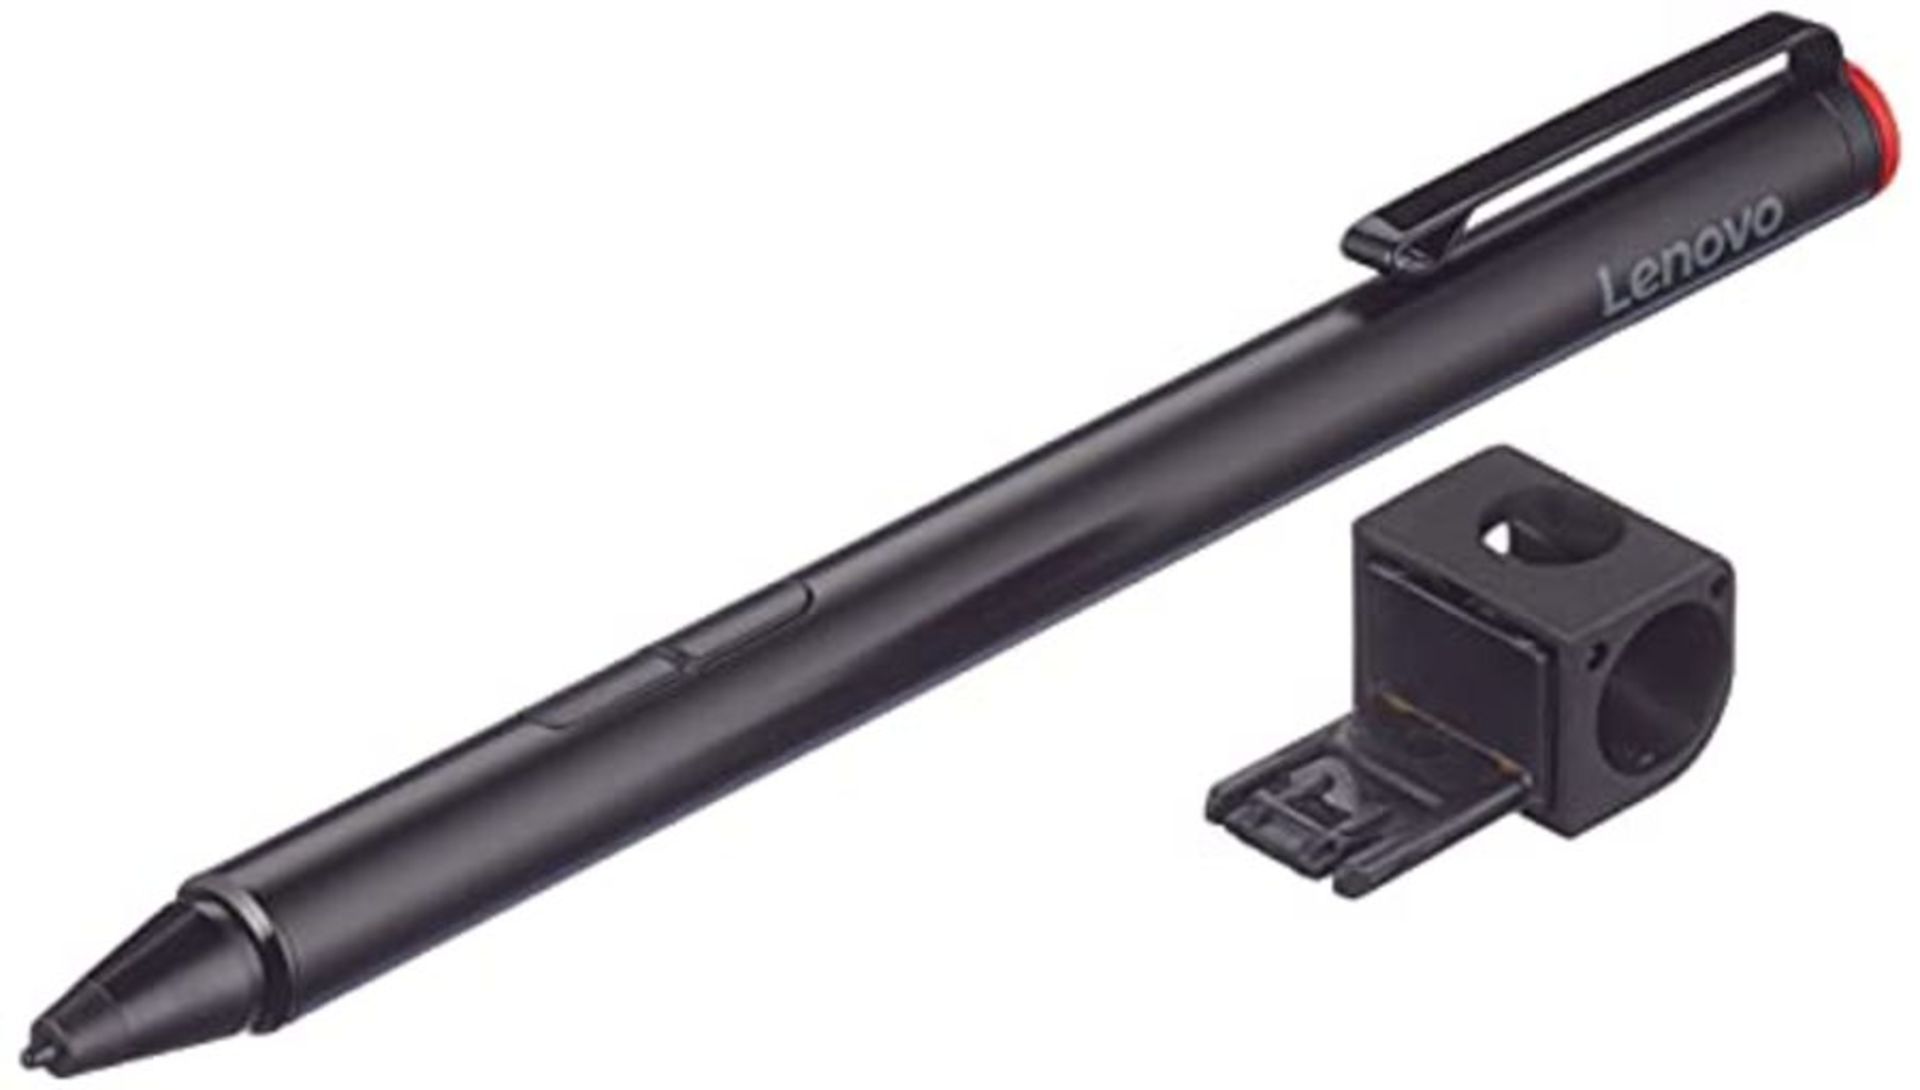 Lenovo Active Pen (GX80K32884) for Yoga (Black) (Configurable Buttons, Anti-accident C